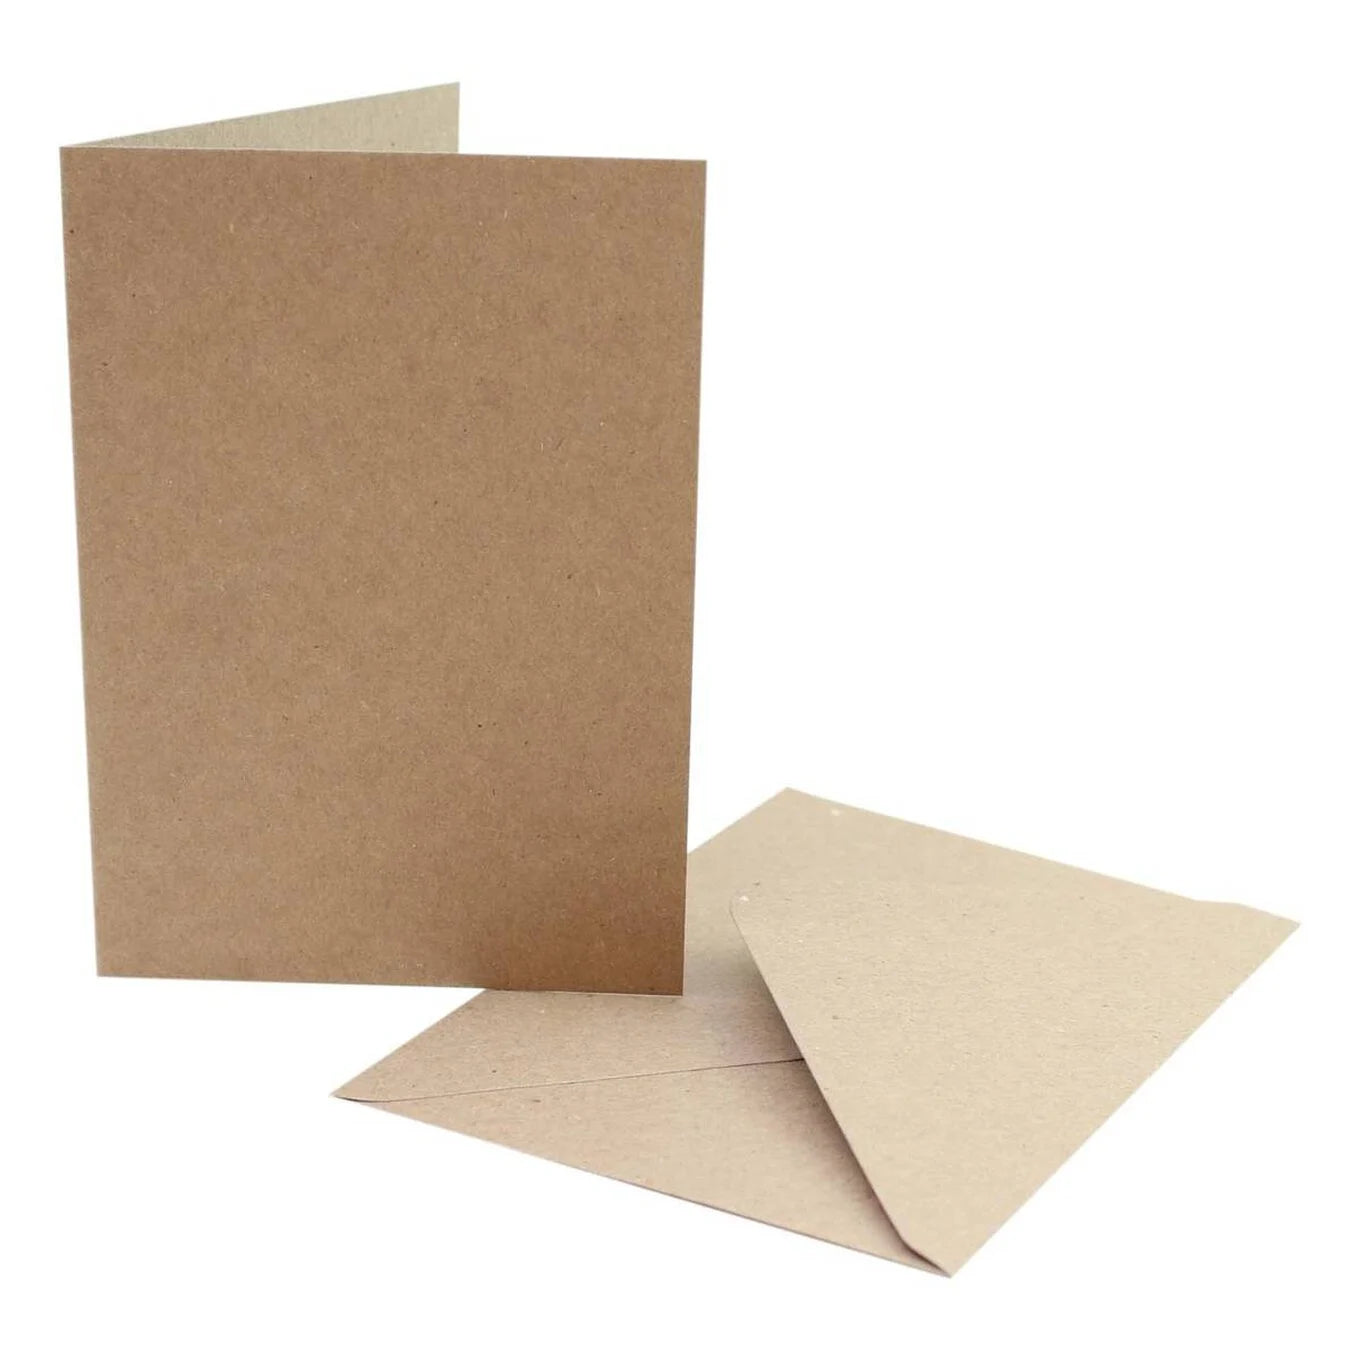 5 Blank Brown kraft cards + envelopes